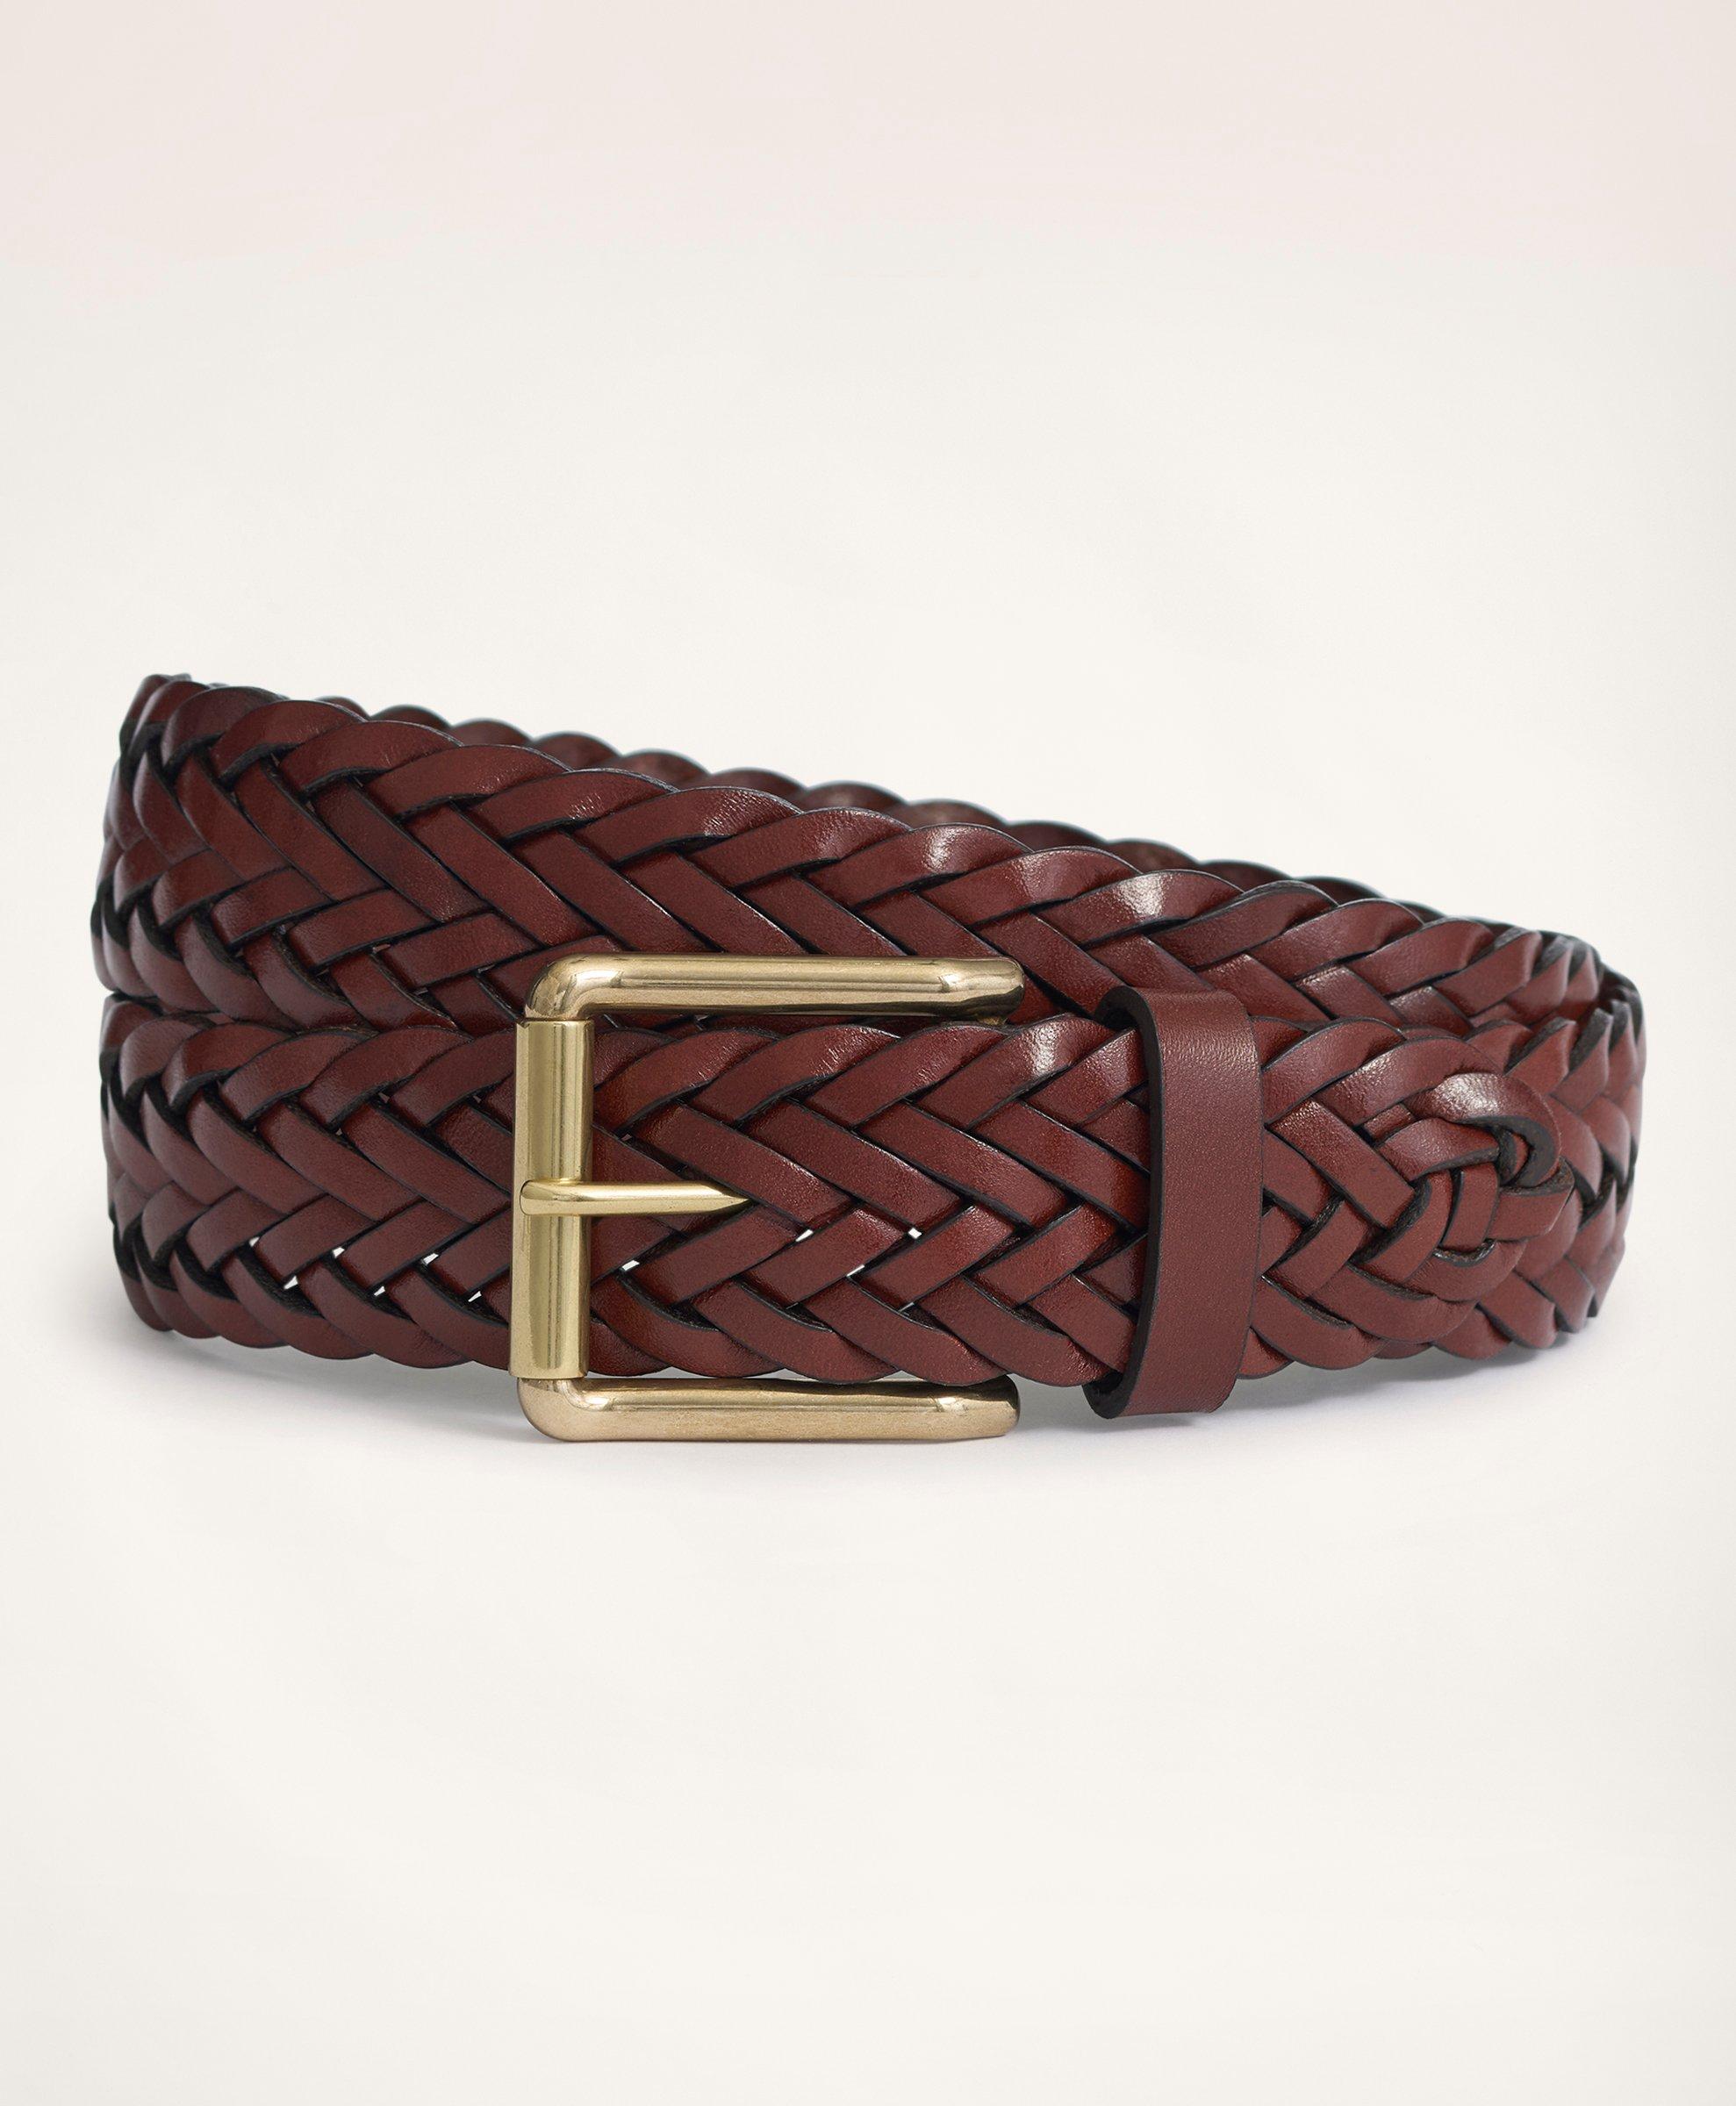 Brooks Brothers Men's Braided Leather Belt, Dark Brown